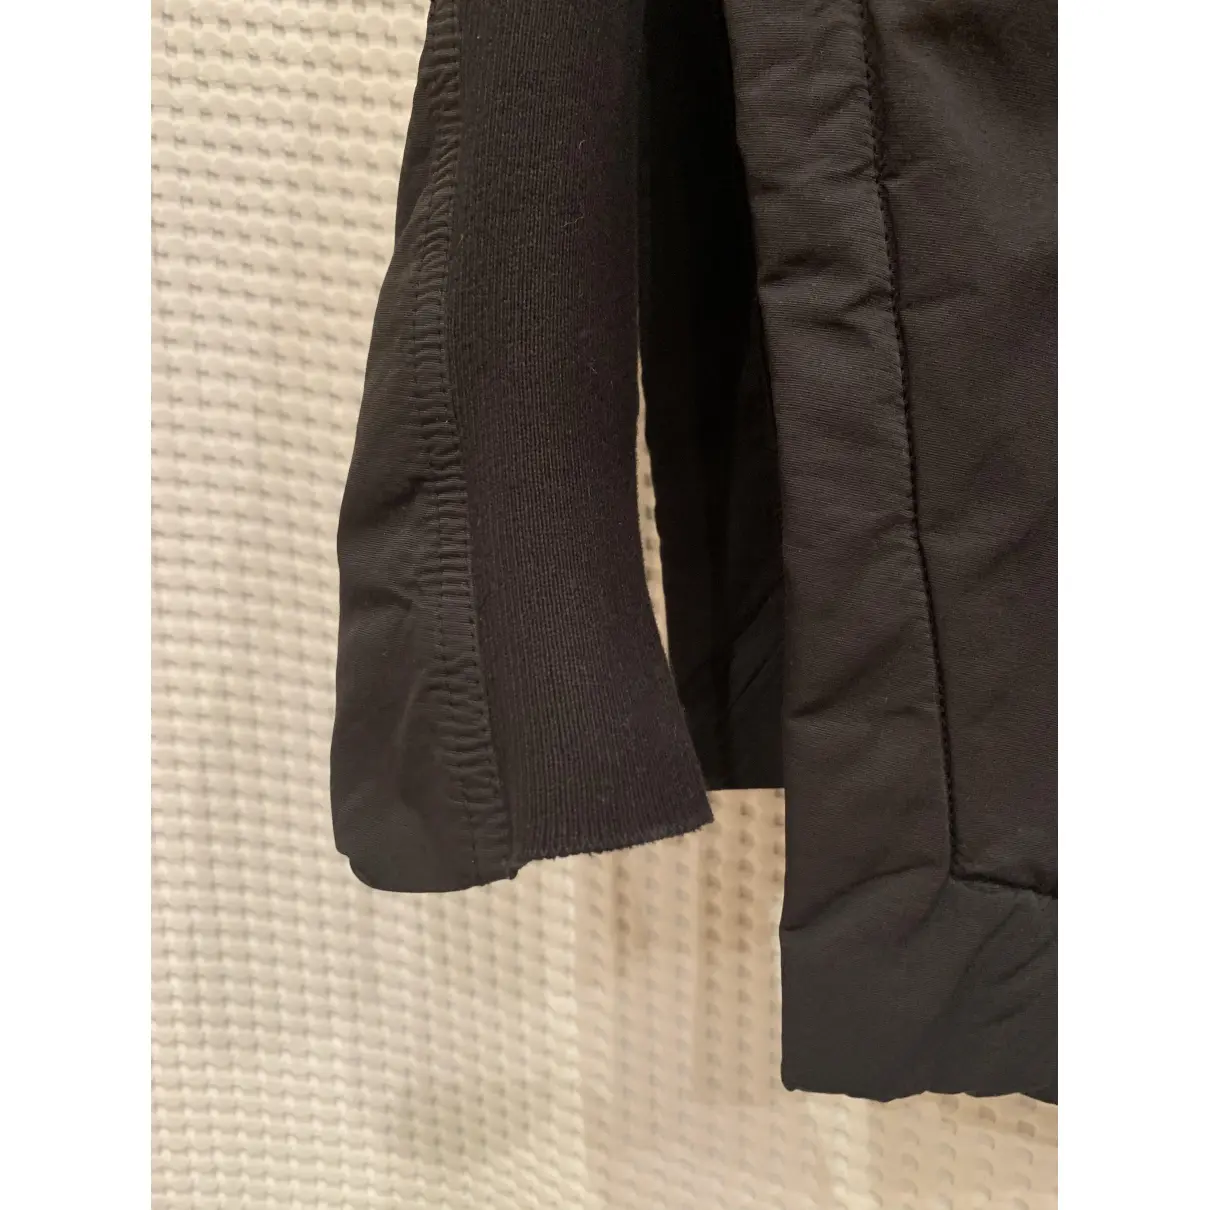 Buy Rick Owens Drkshdw Black Synthetic Jacket online